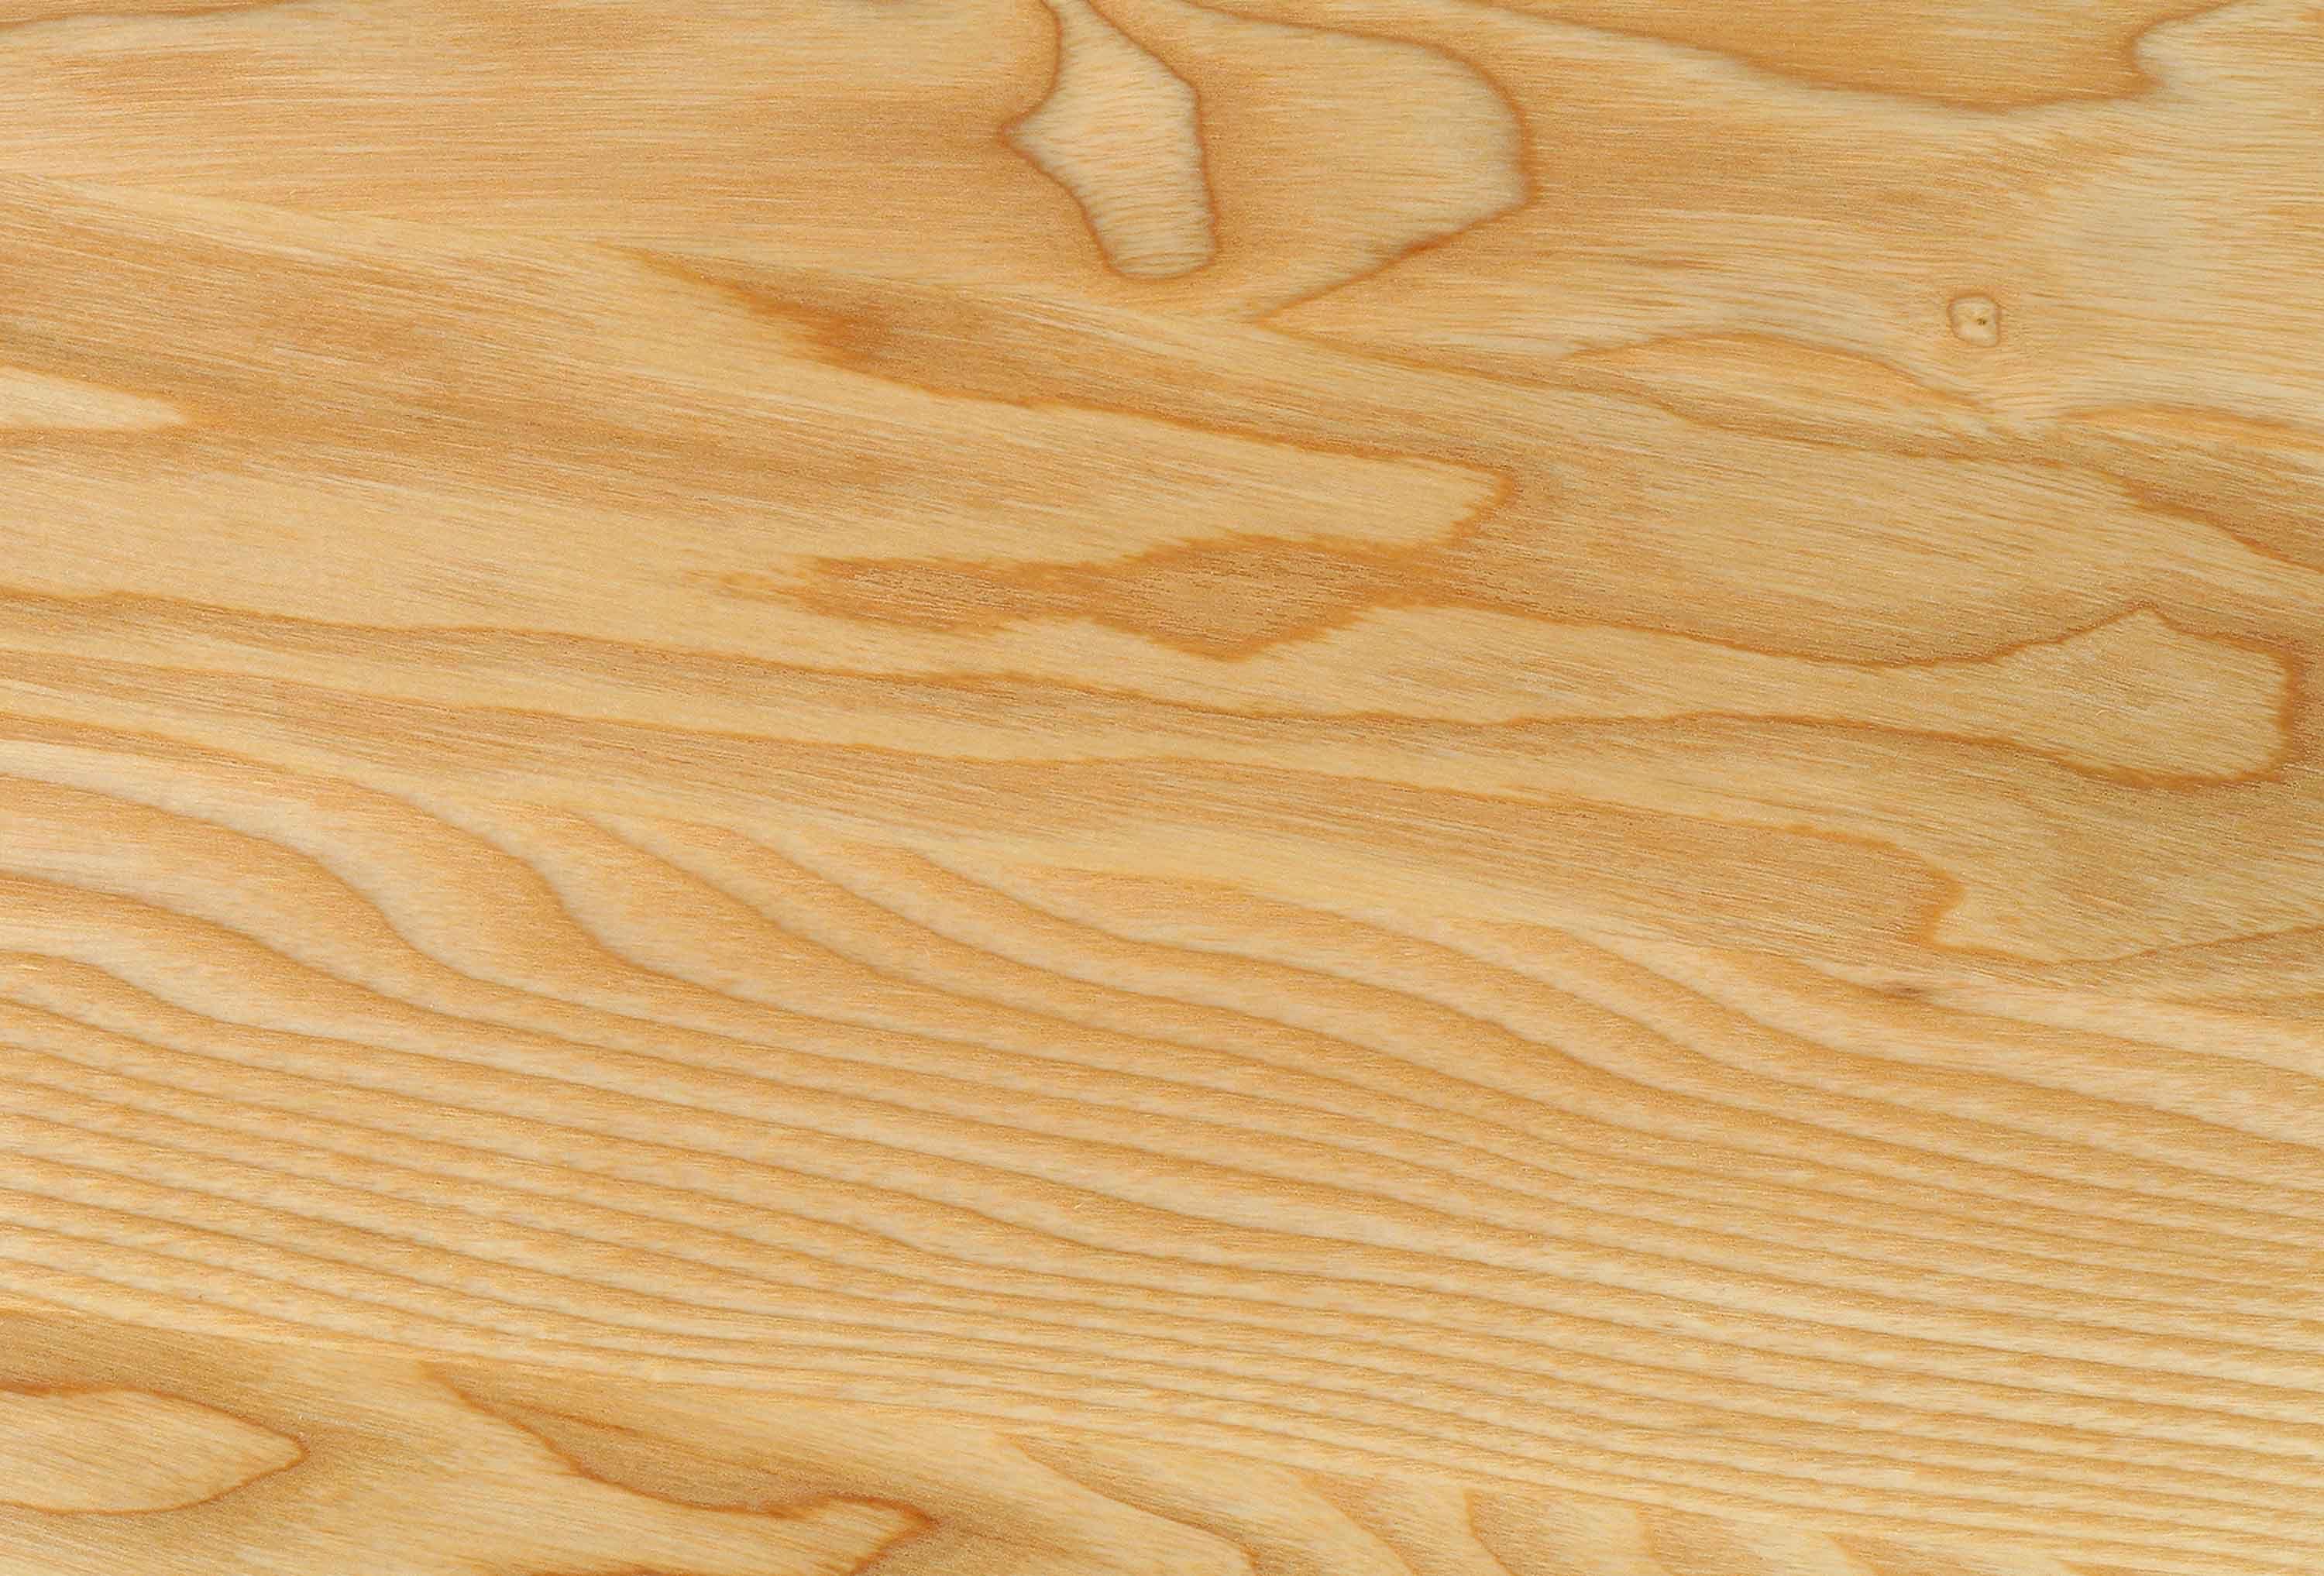 The Background HD Light Wood Texture Grain Studio